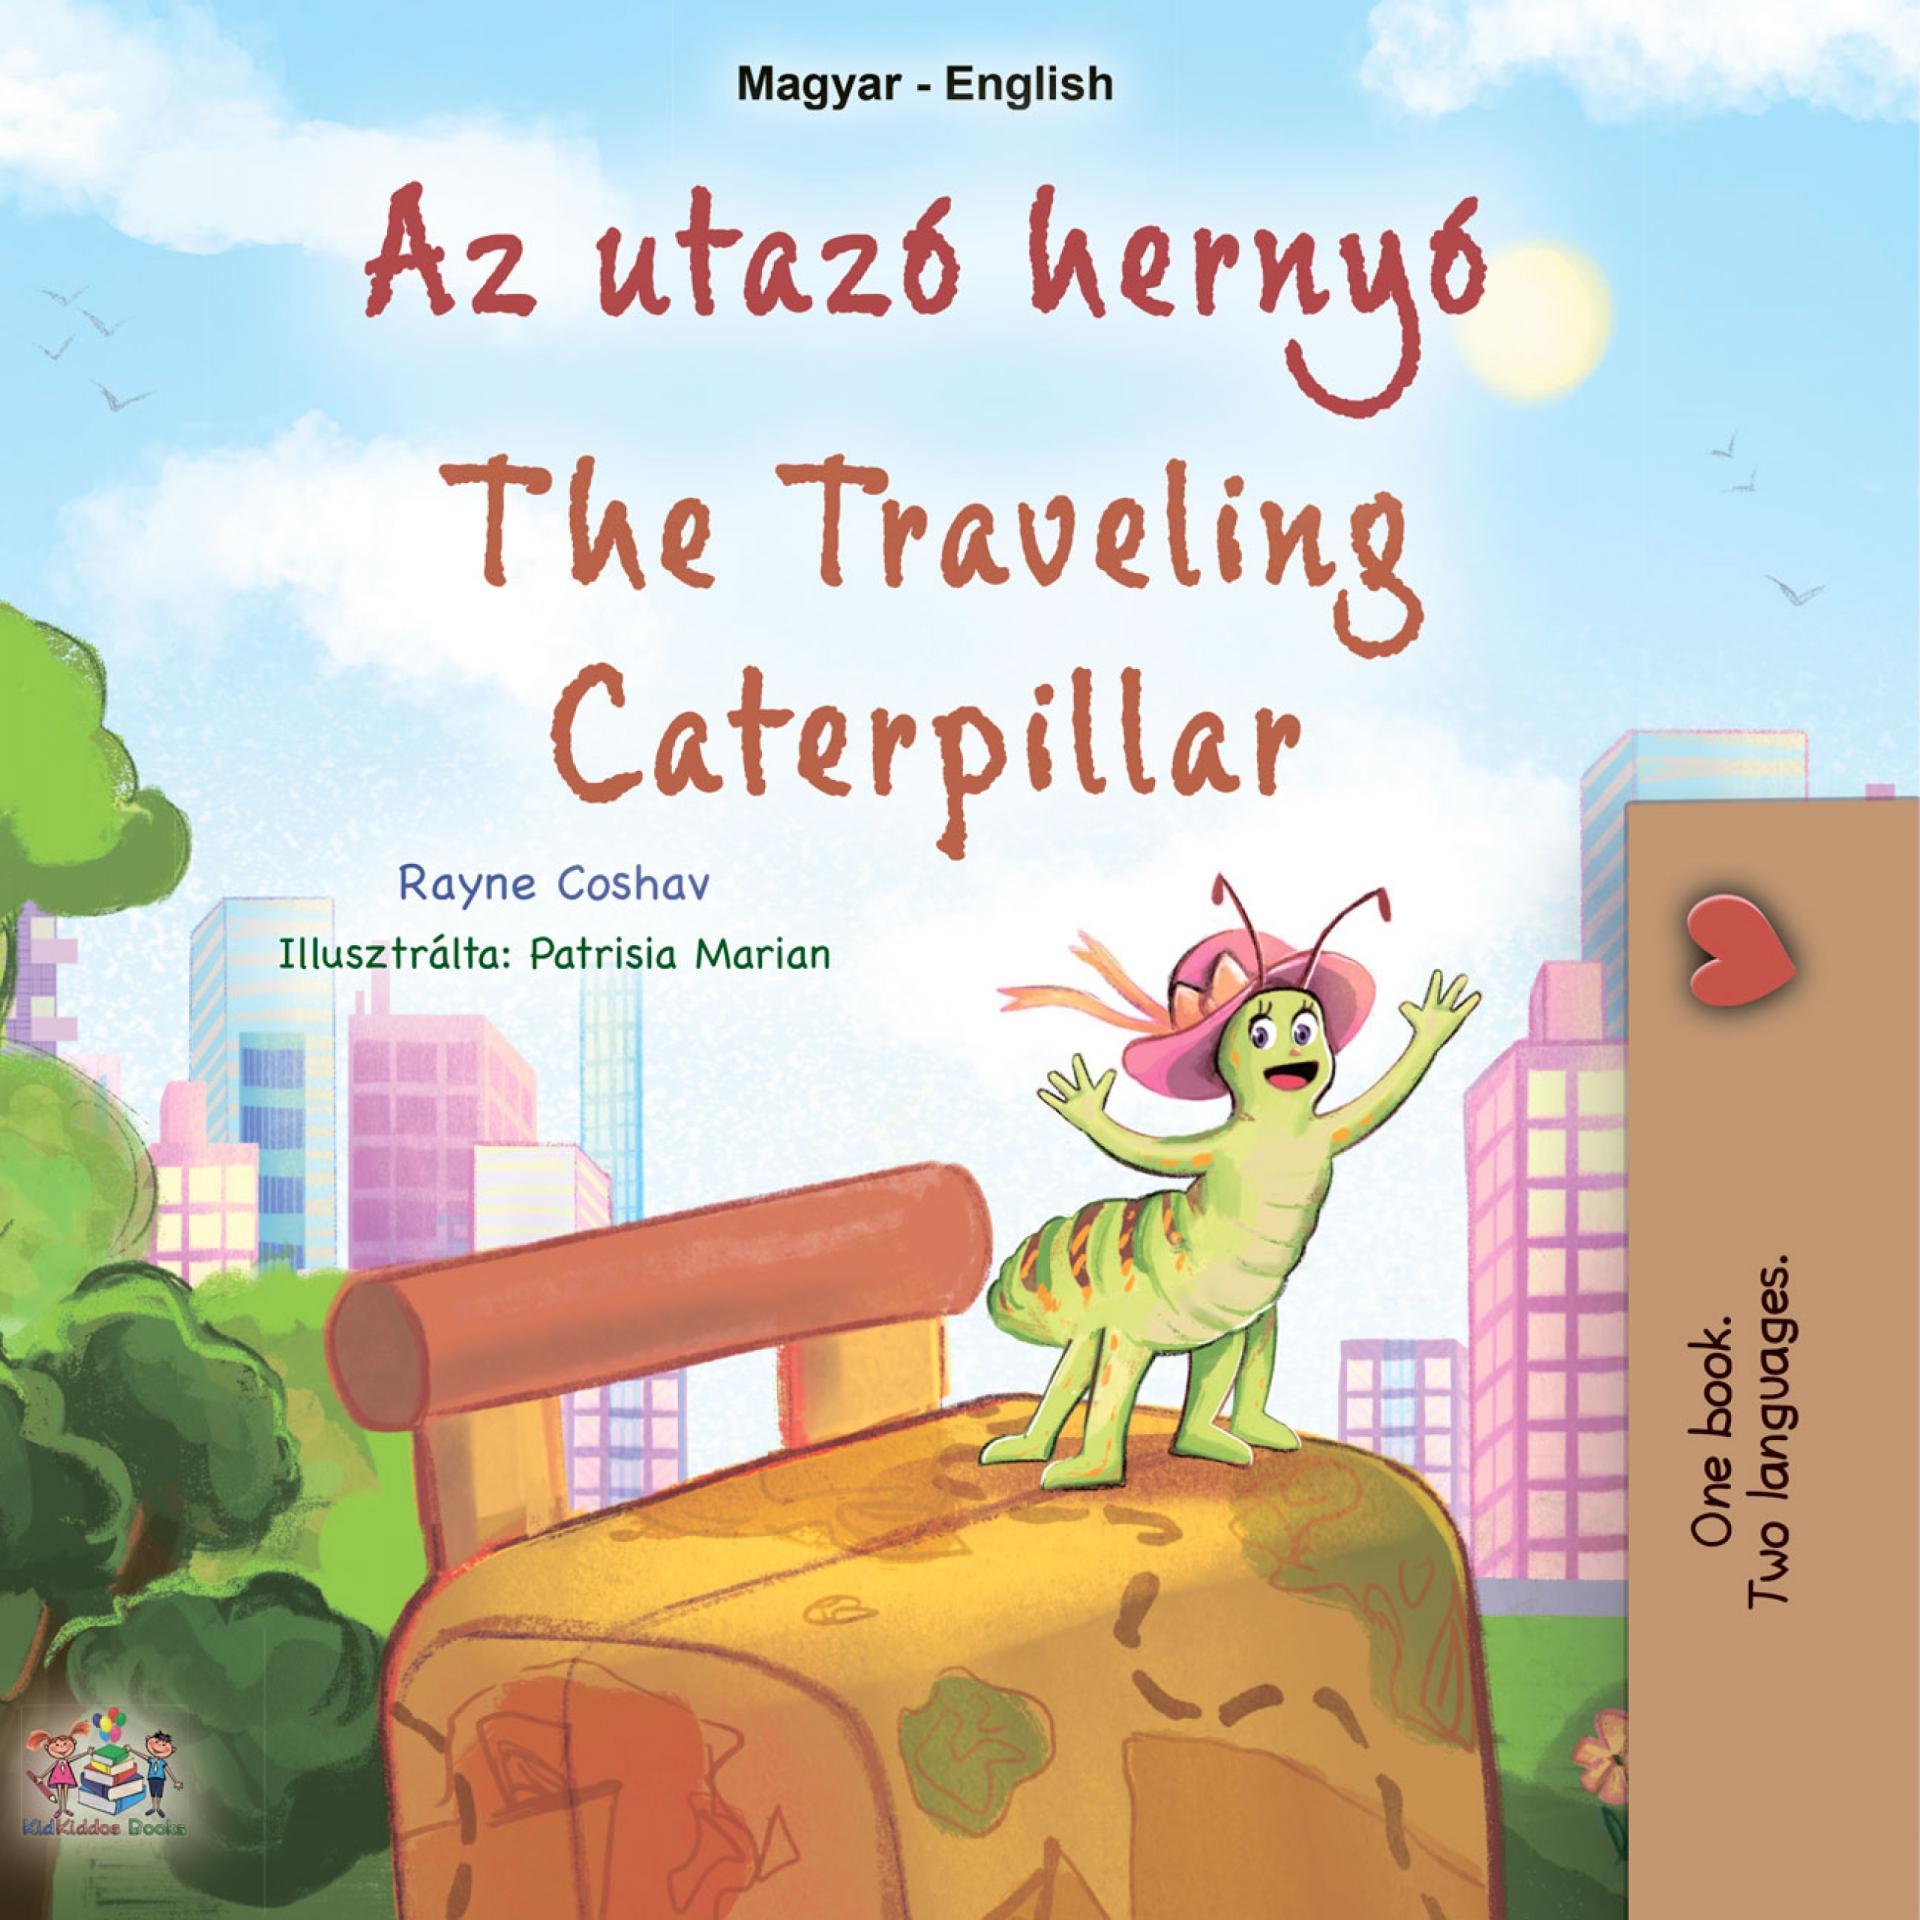 Az utazó hernyó  - The traveling caterpillar (Hungarian English Bilingual Collection)